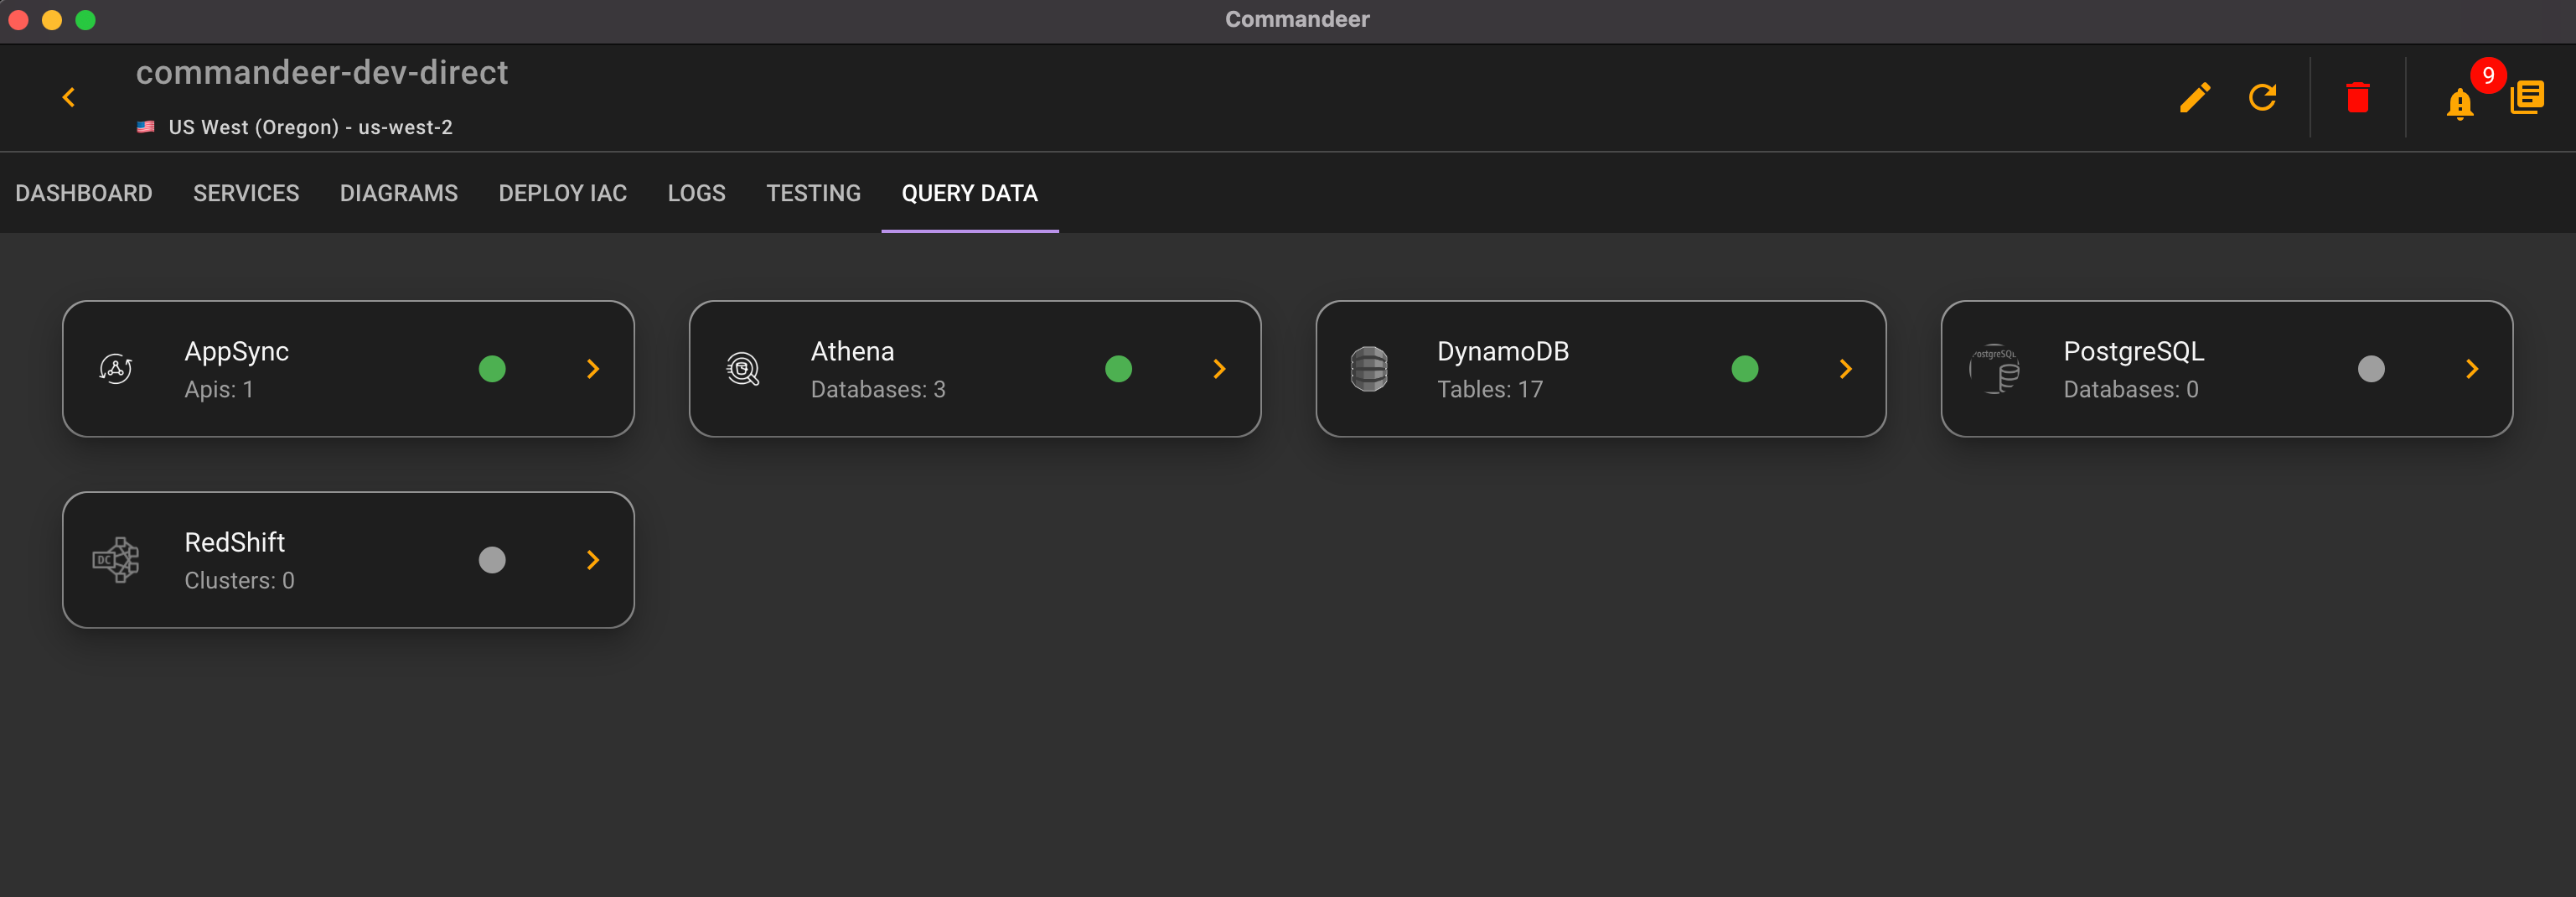 Commandeer Account - Query Data Tab